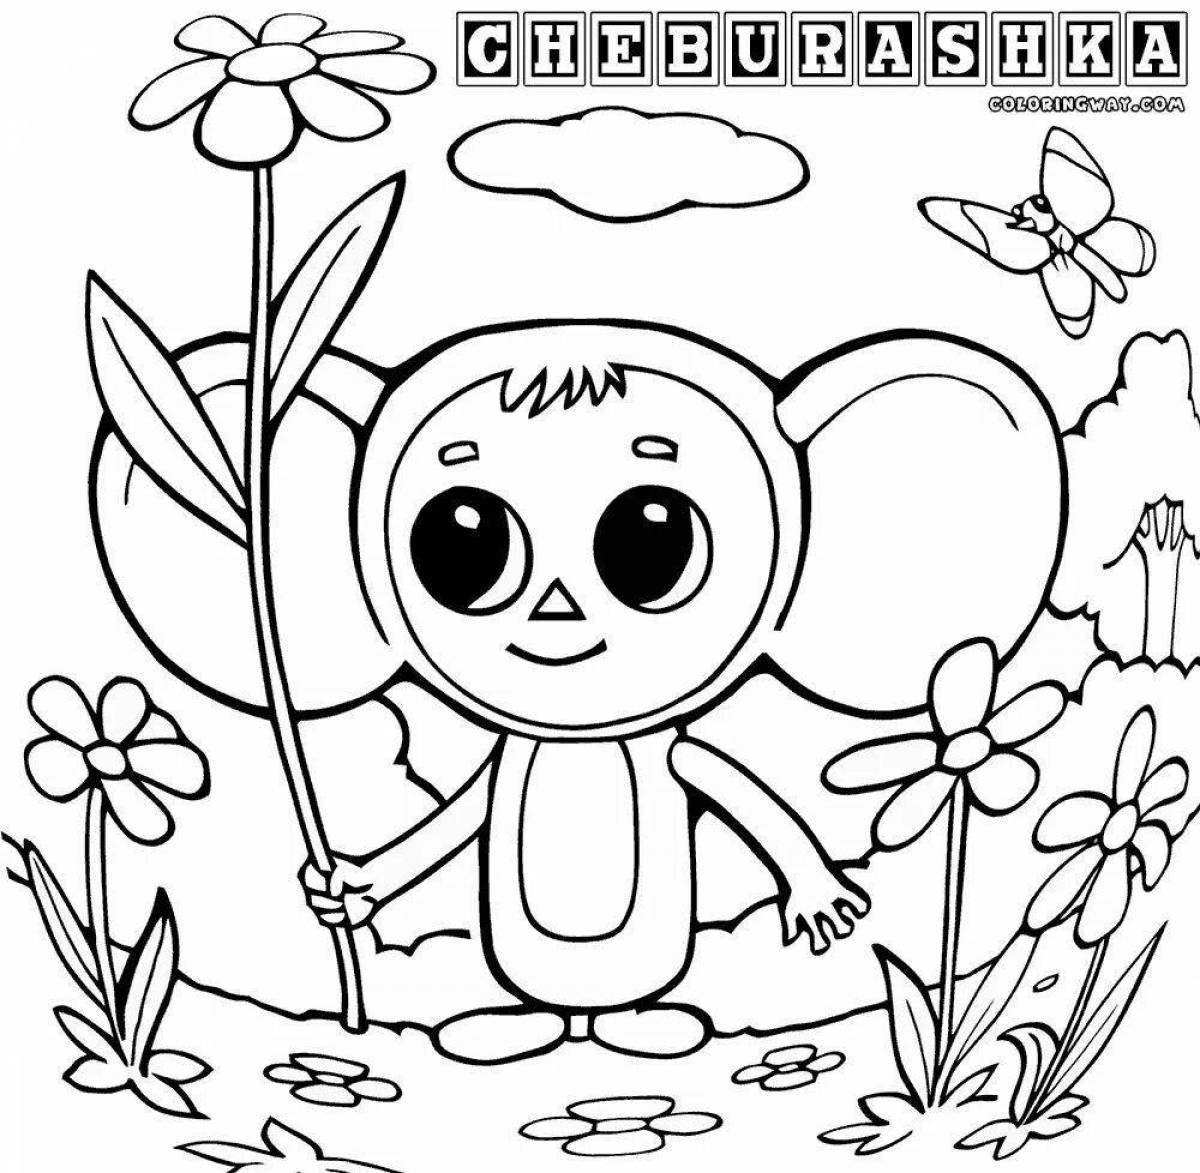 Bright Cheburashka in the movies